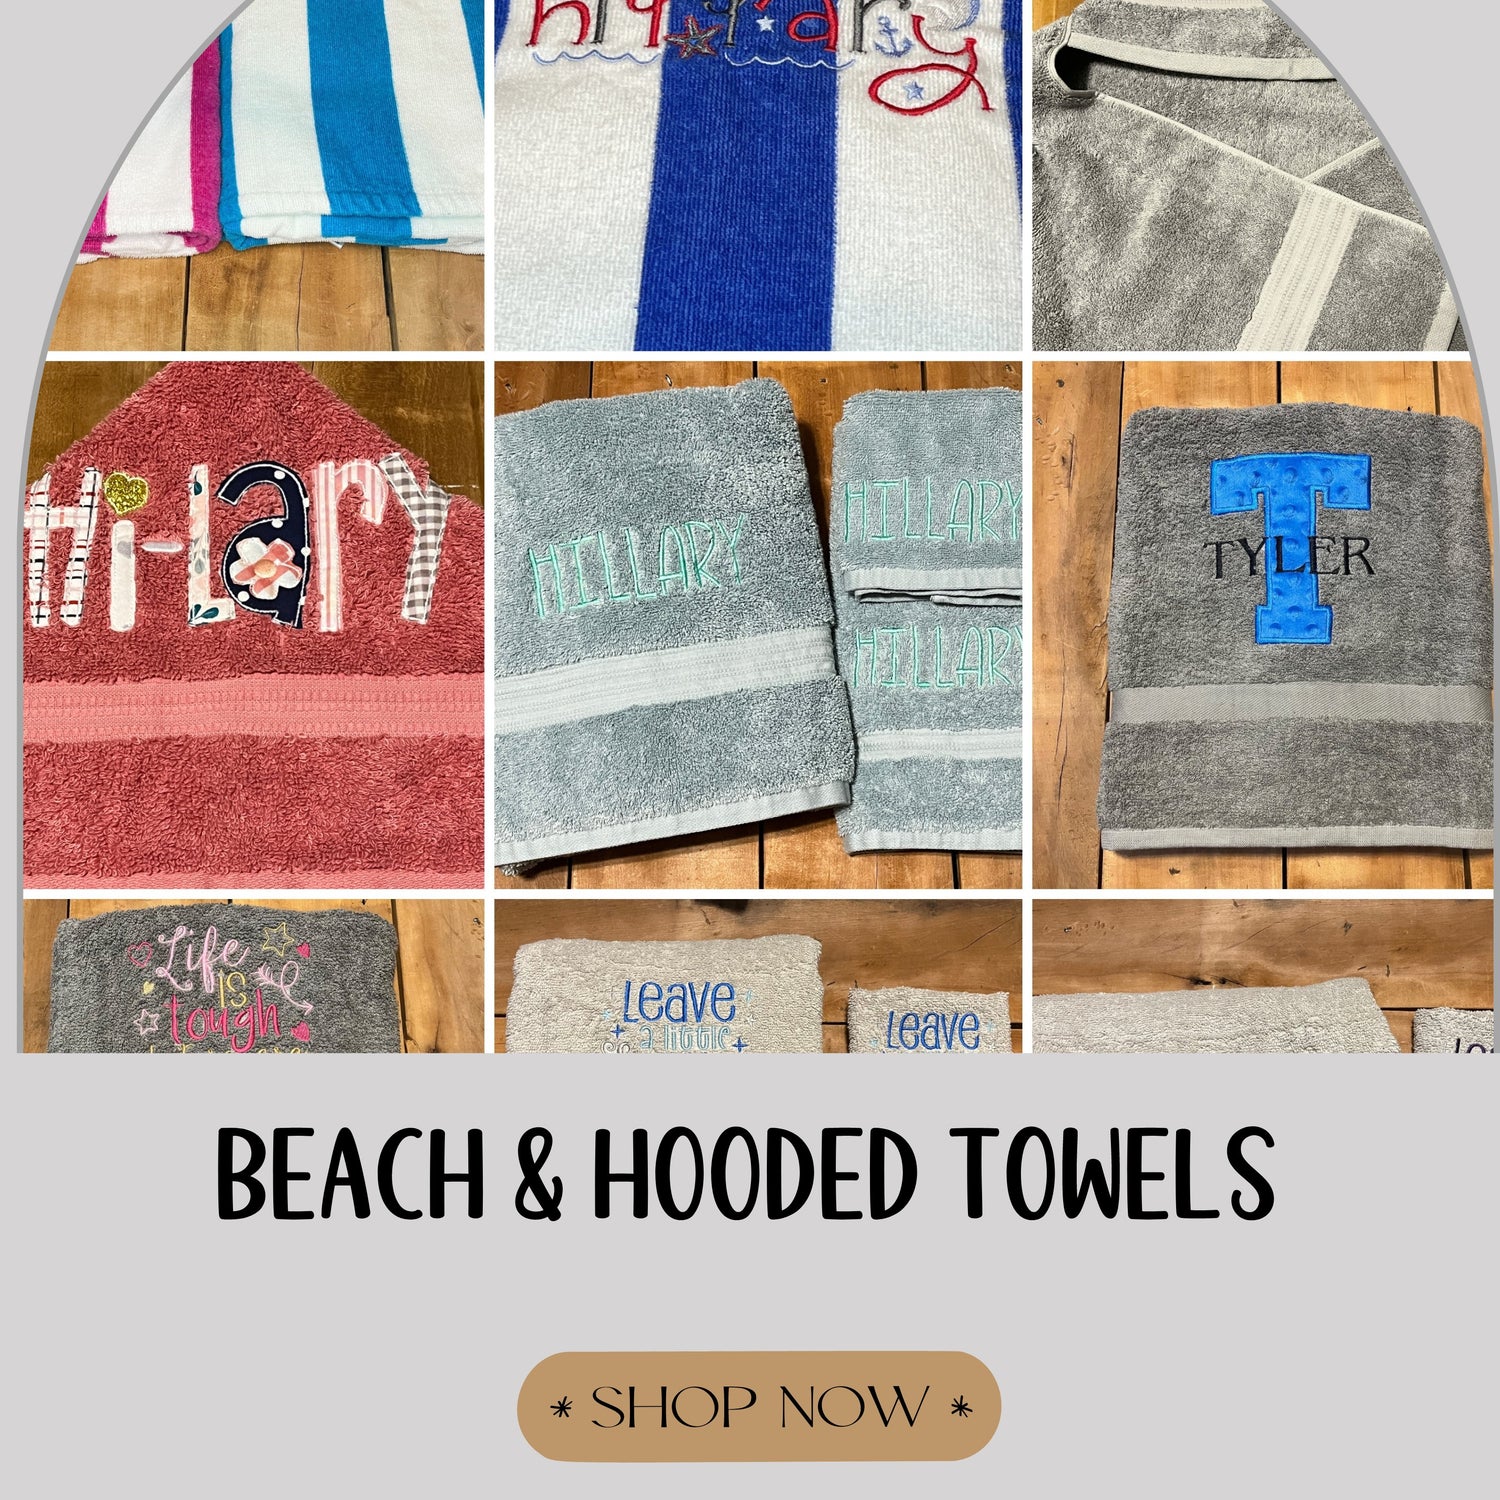 Personalized Towels - Beach Towels, Hooded Towels, Bath Towels, Hand Towels, & Wash Cloths